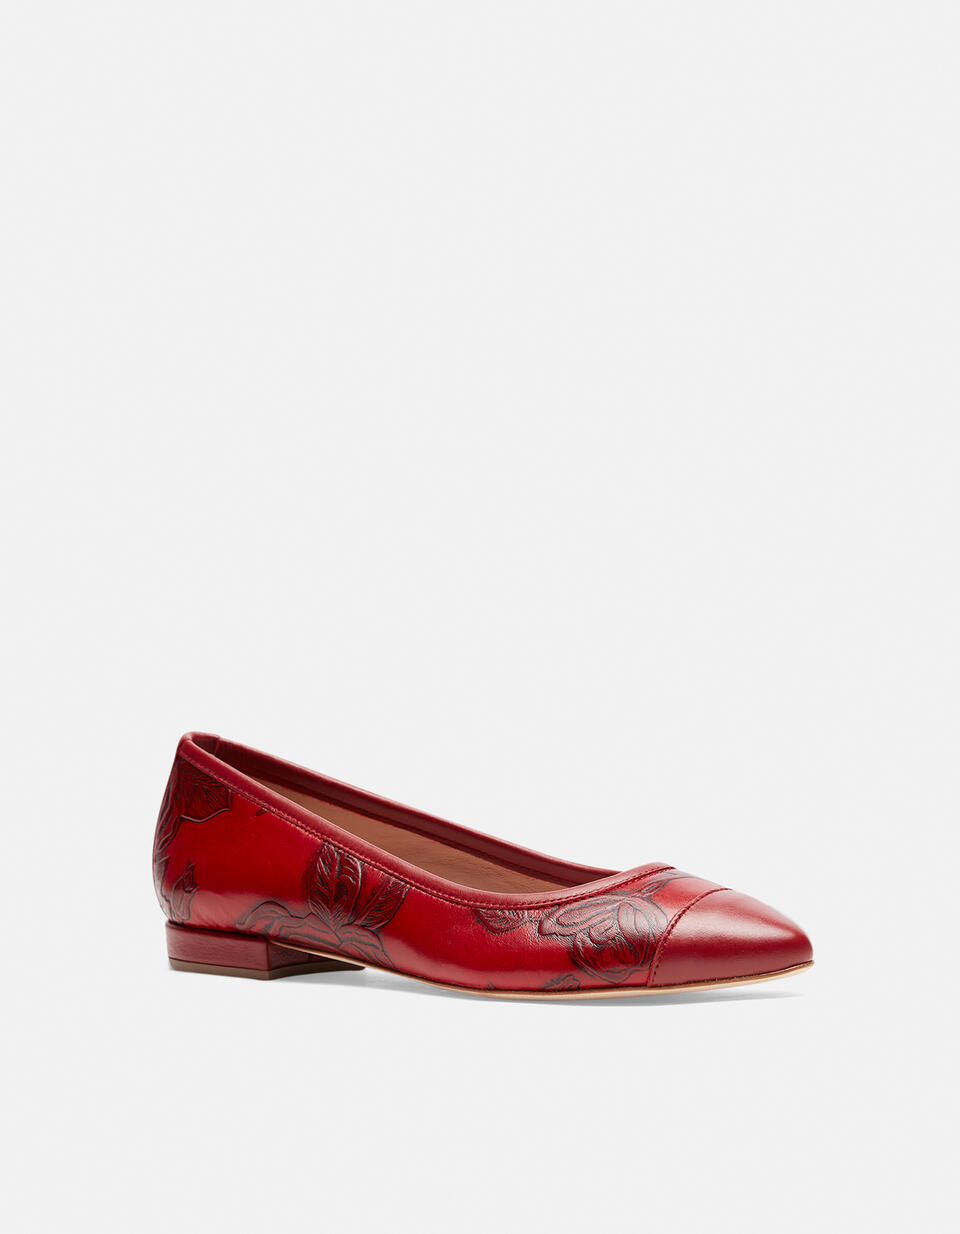 Mimi flat - Women Shoes | Shoes ROSSO - Women Shoes | ShoesCuoieria Fiorentina